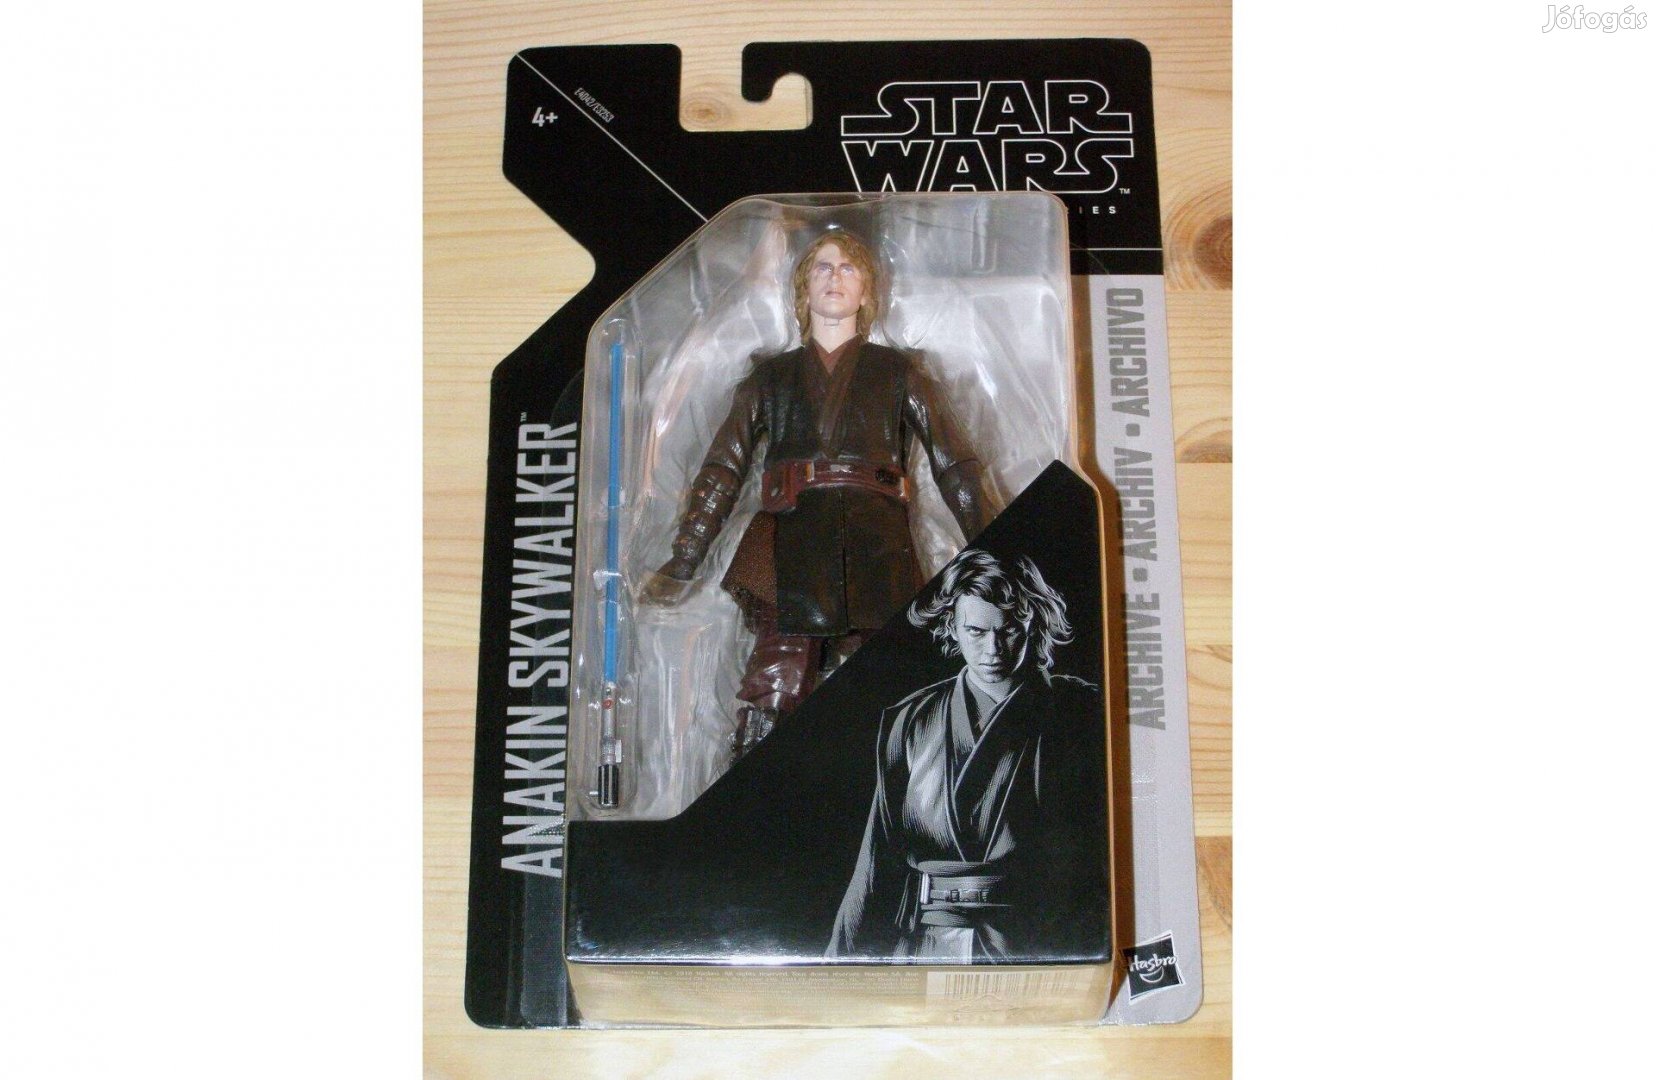 Star Wars Black Series Archive 15 cm (6 inch) Anakin Skywalker figura